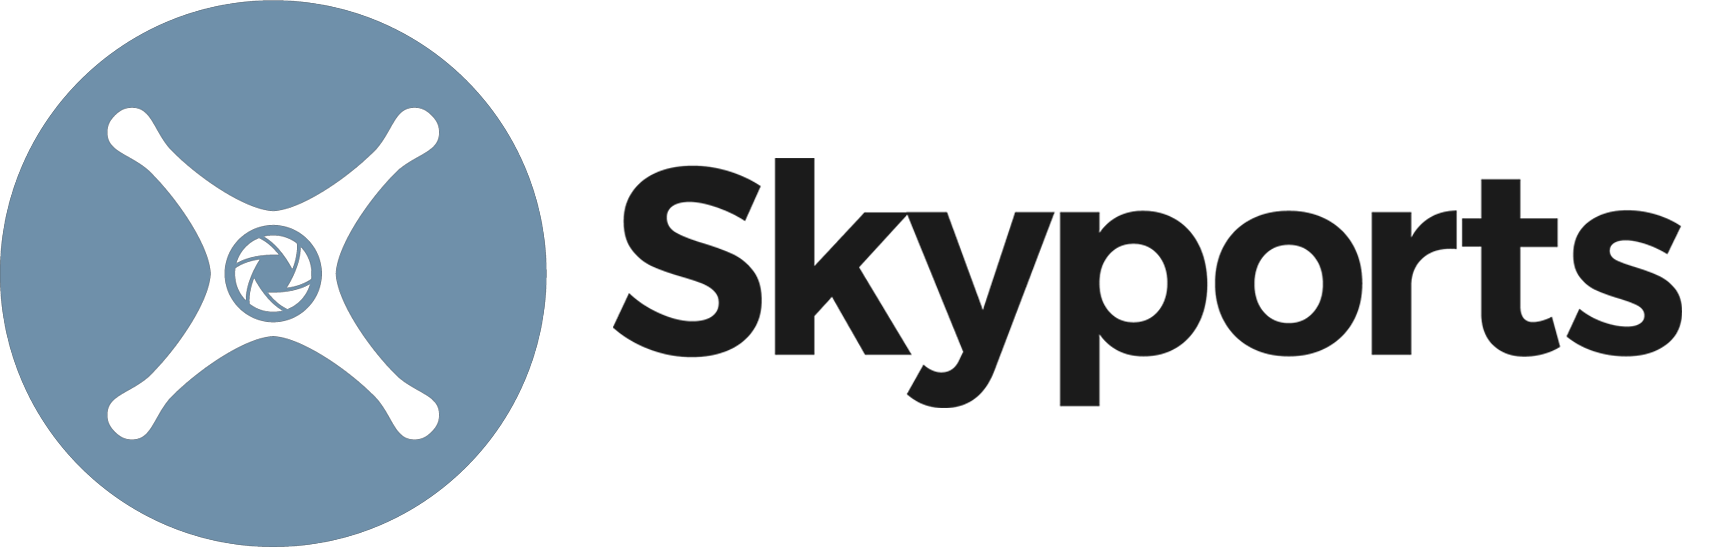 skyports_logo.png